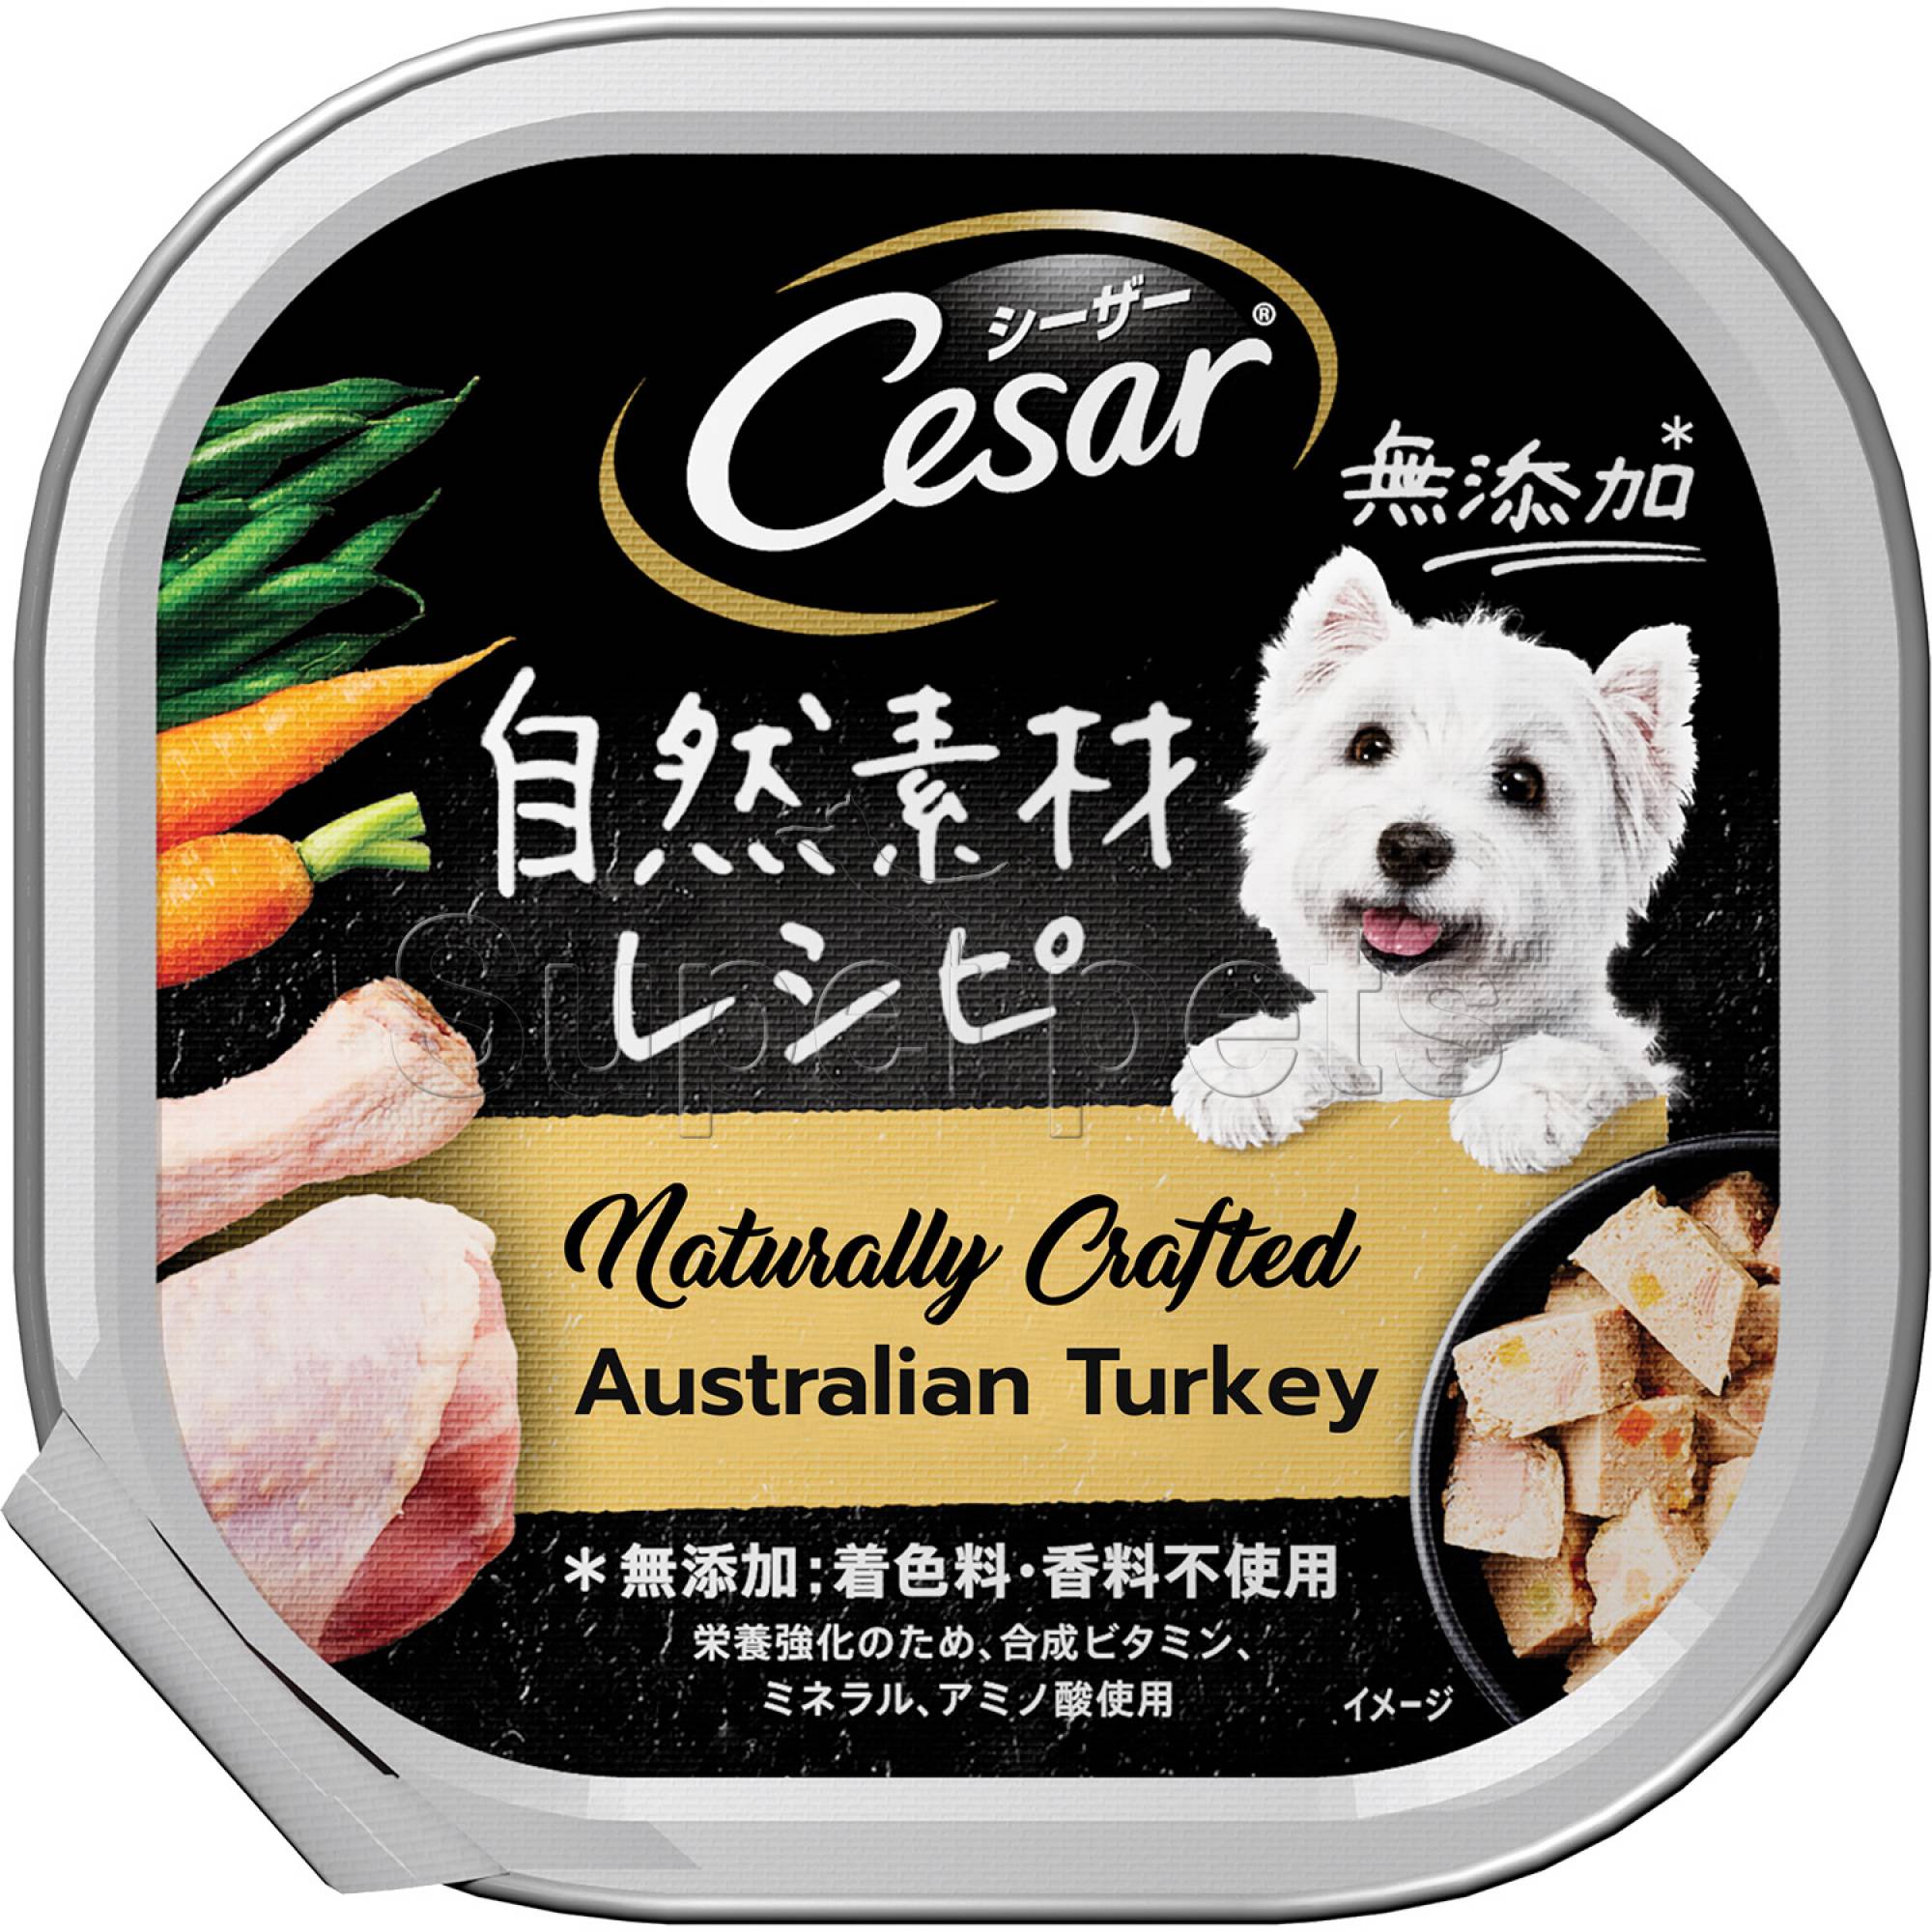 Cesar - Naturally Crafted Australian Turkey 85g